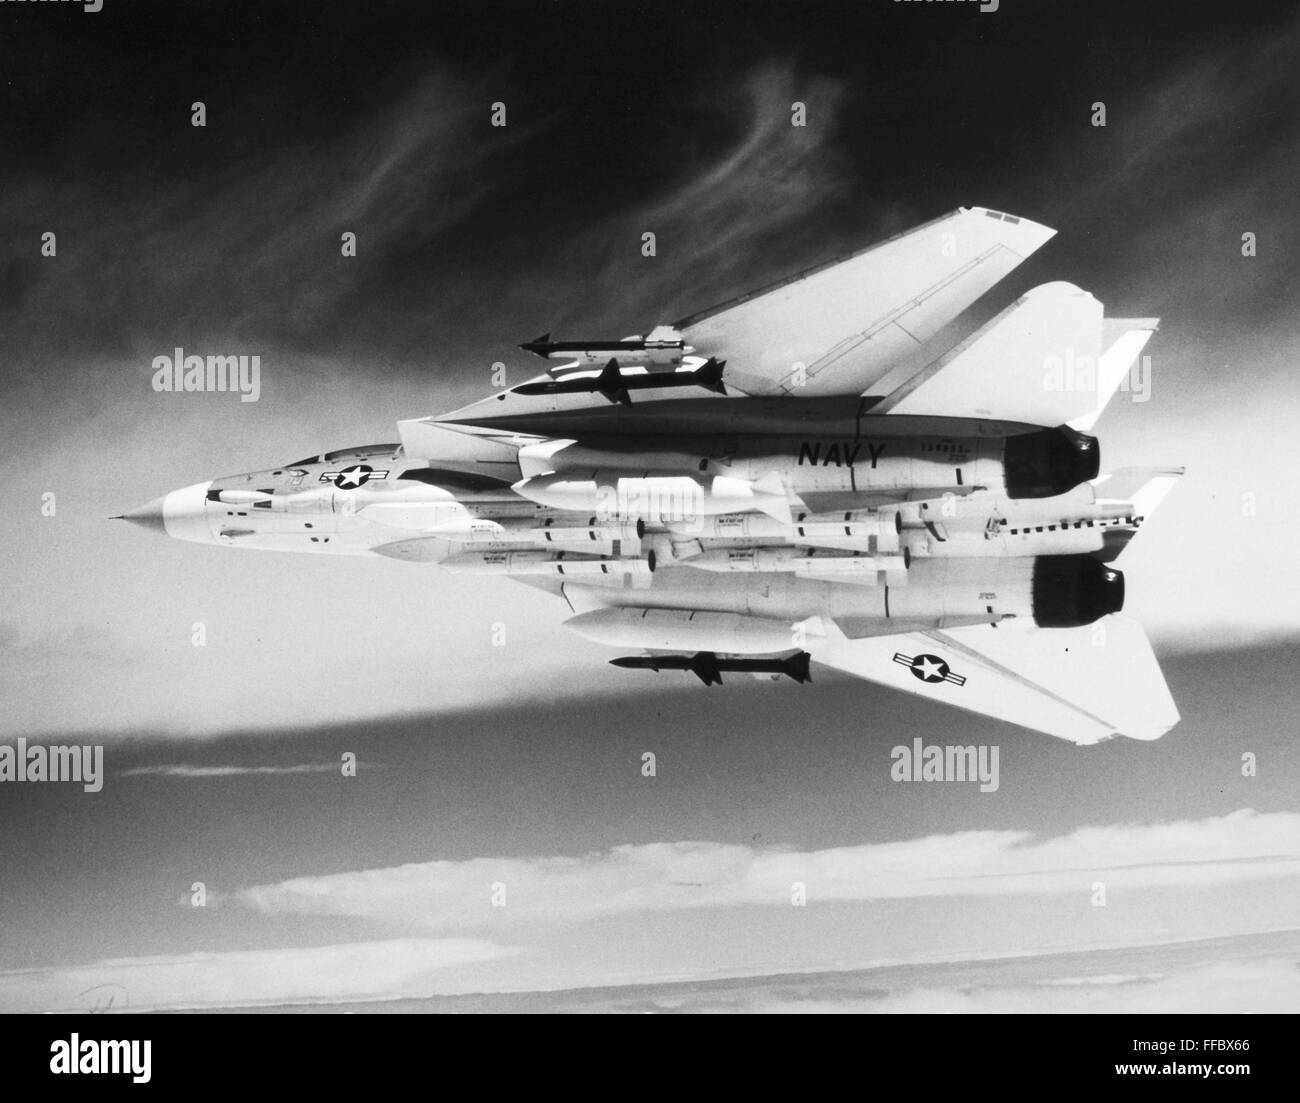 F-14 TOMCAT FIGHTER PLANE. /nThe Grumman F-14 Tomcat fighter plane of ...